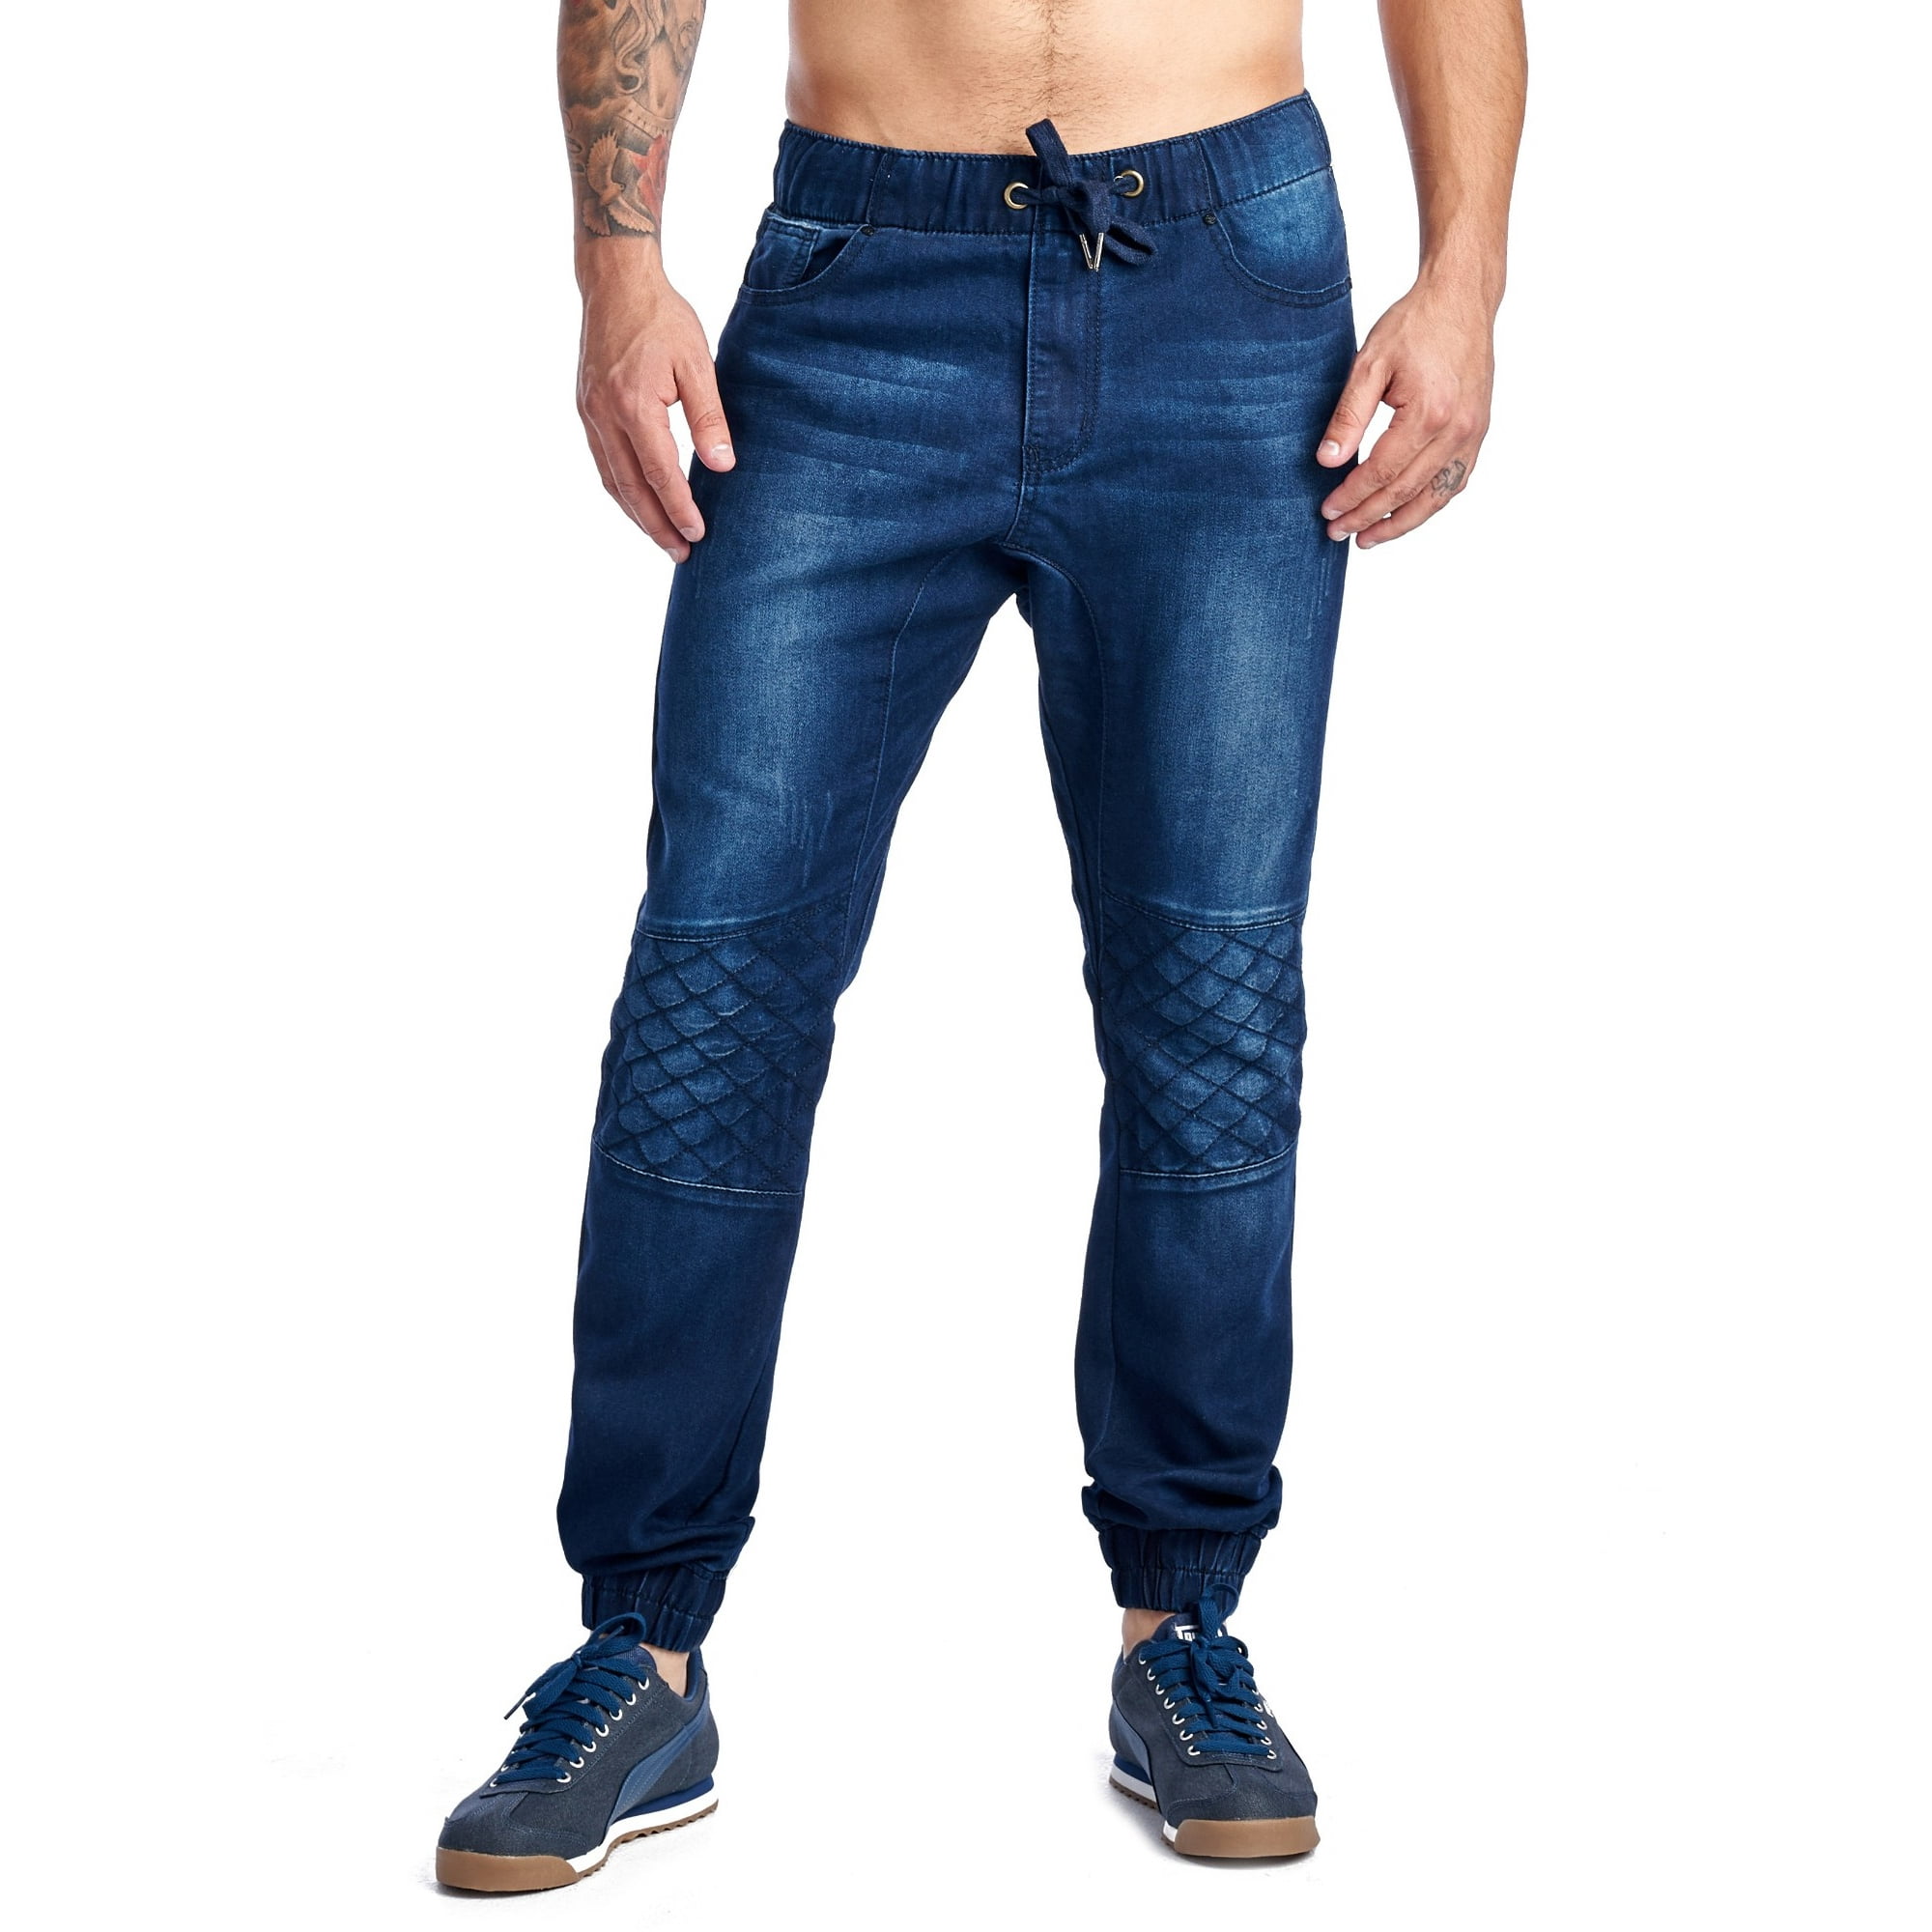 A Men's Denim Pant Jogger Styling Fit Dark Blue 2X-Large Walmart.com